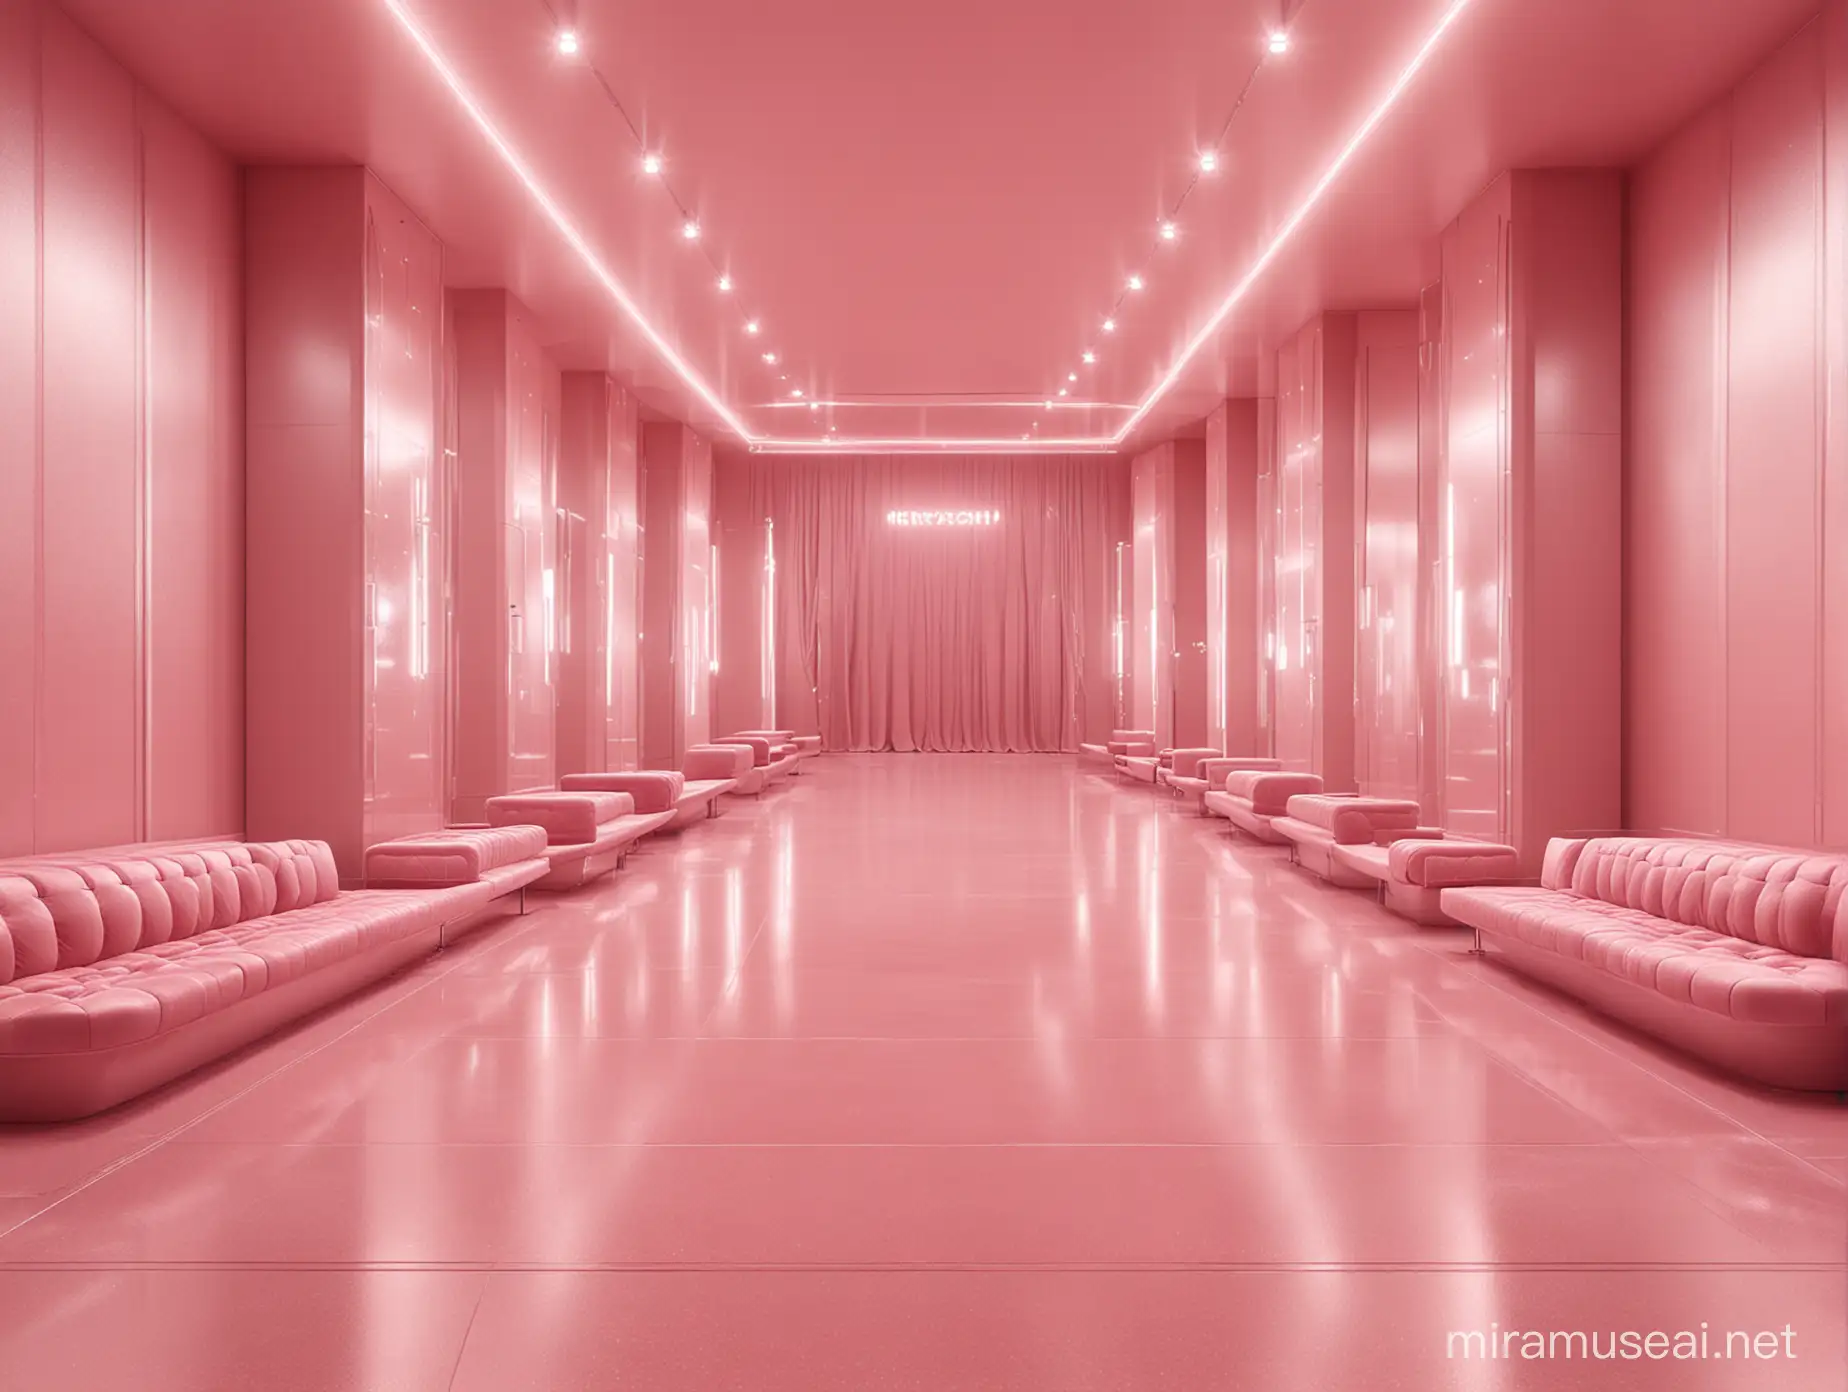 Elegant Iridescent Pink Runway Stage with Diamond Finish in Luxurious Catwalk Interior